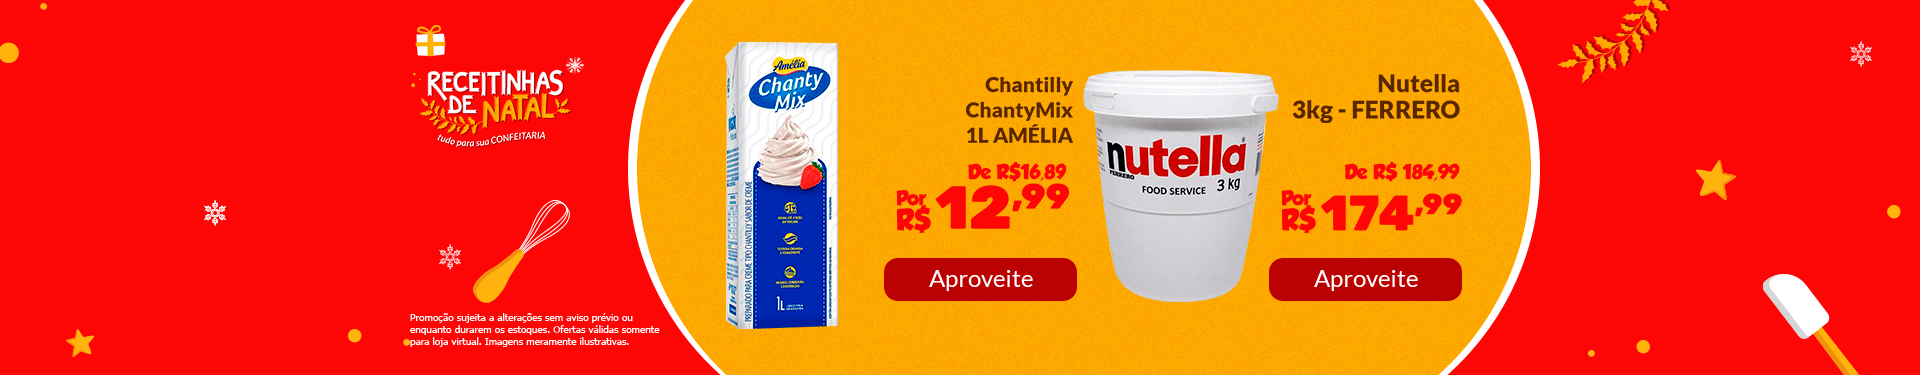 Chantilly ChantyMix 1L AMÉLIA e Nutella 3kg - FERRERO